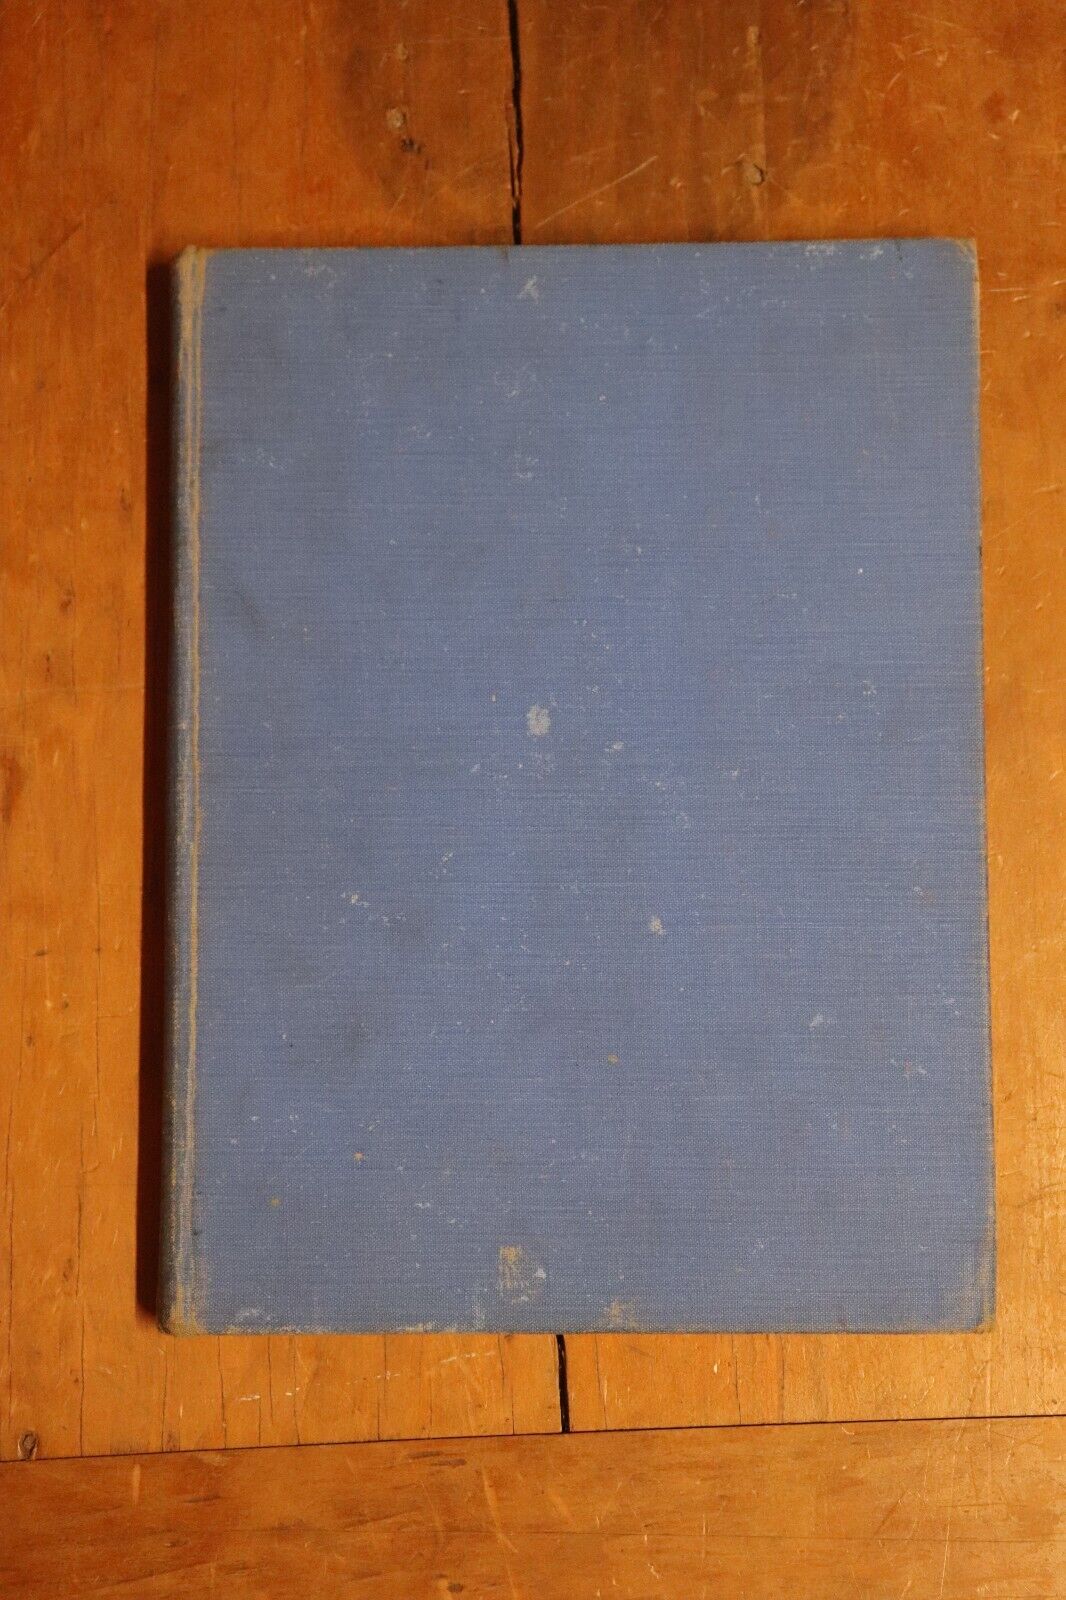 Alfred Wallis Primitive by Sven Berlin - 1949 - 1st Edition - English Artist